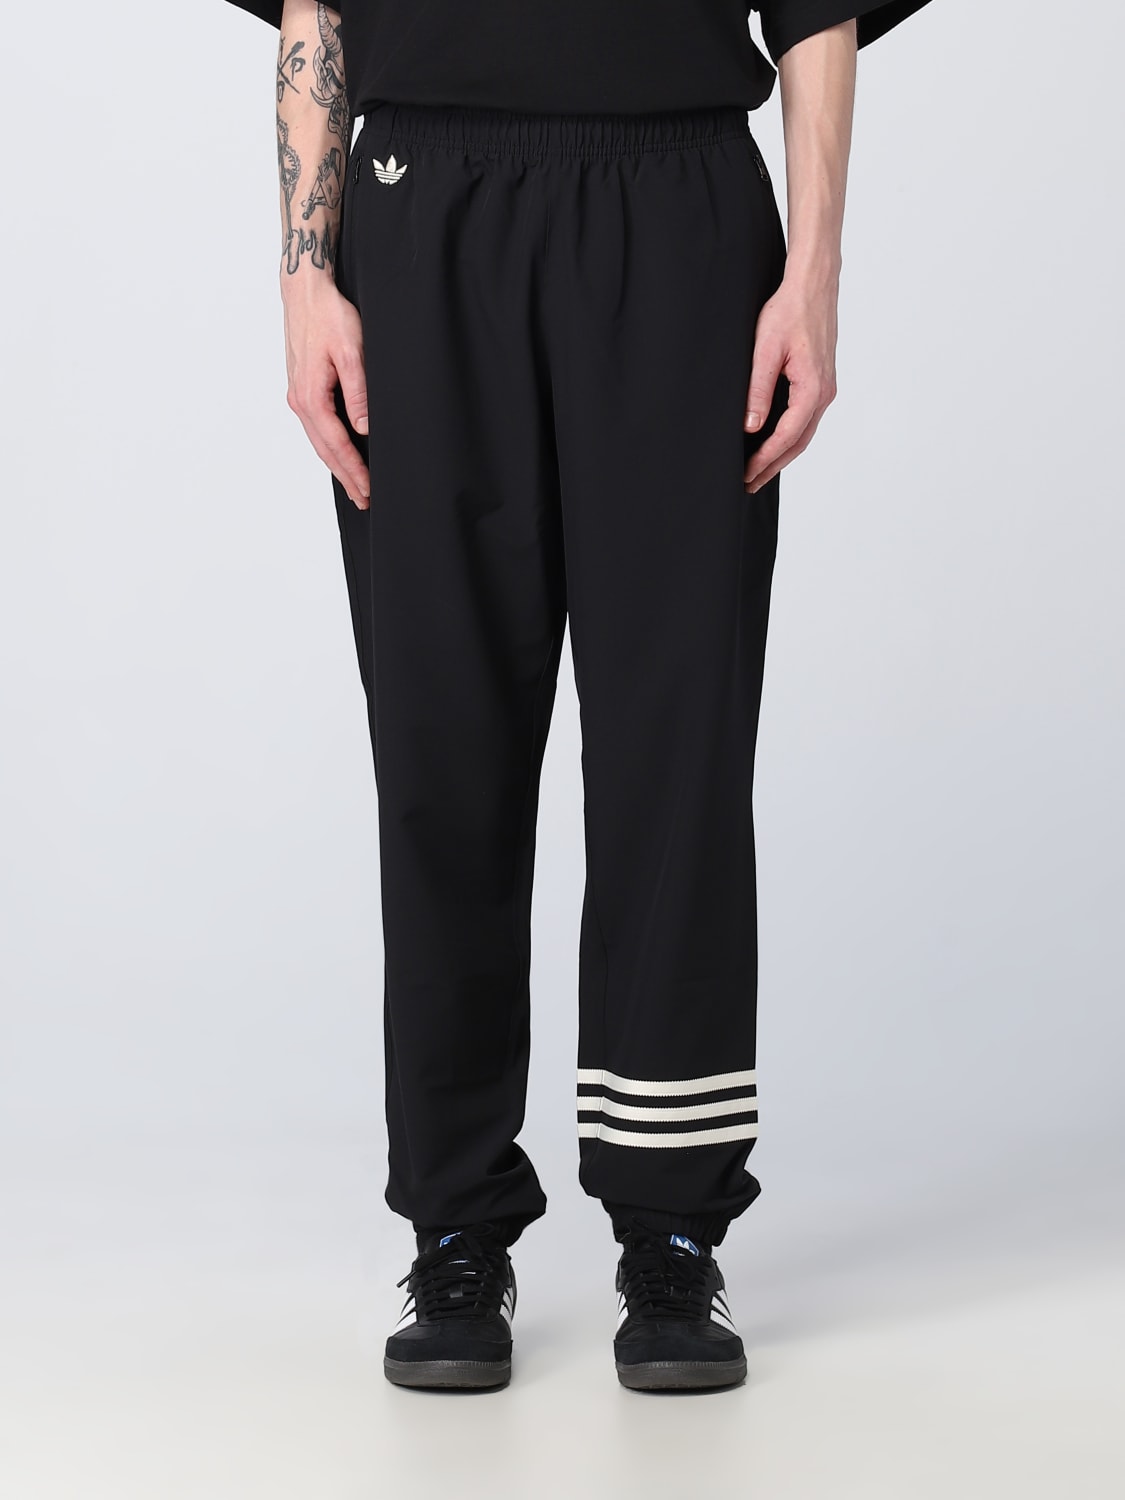 ADIDAS ORIGINALS: pants for man - Black | Adidas Originals pants HM1864 ...